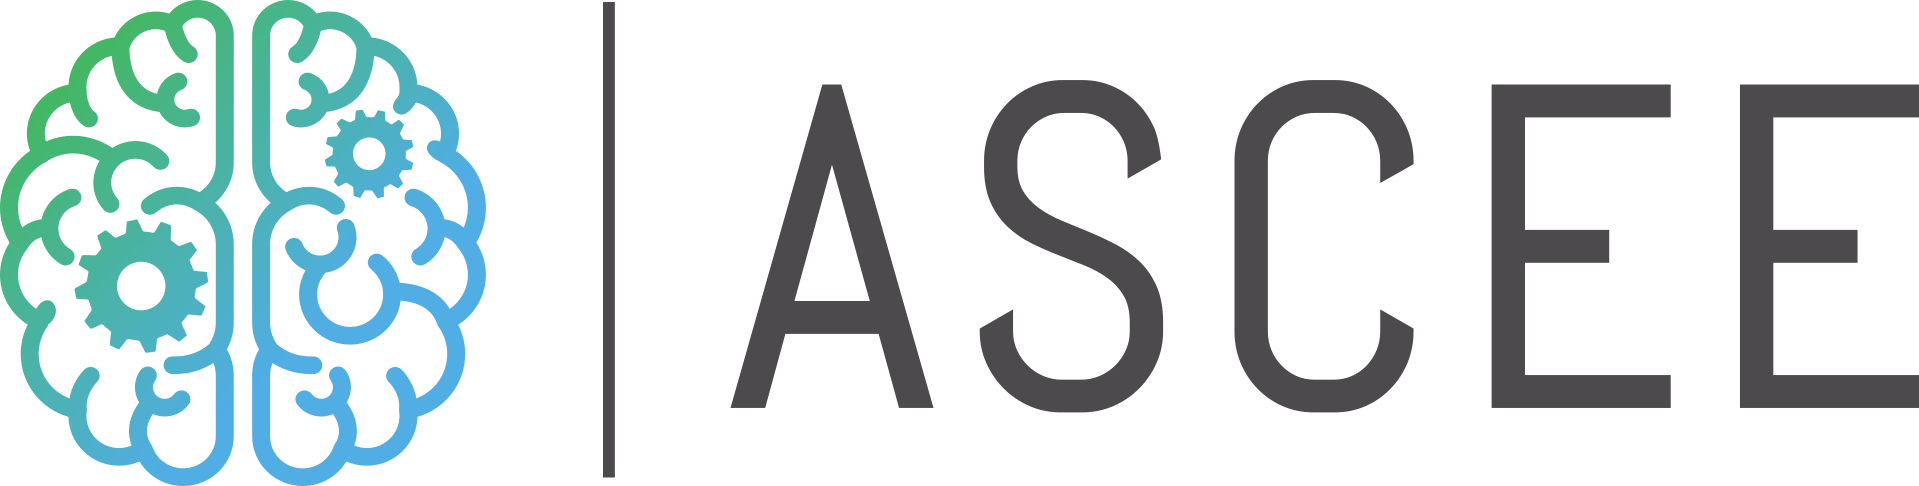 Comsol认证顾问Ascee的徽标。